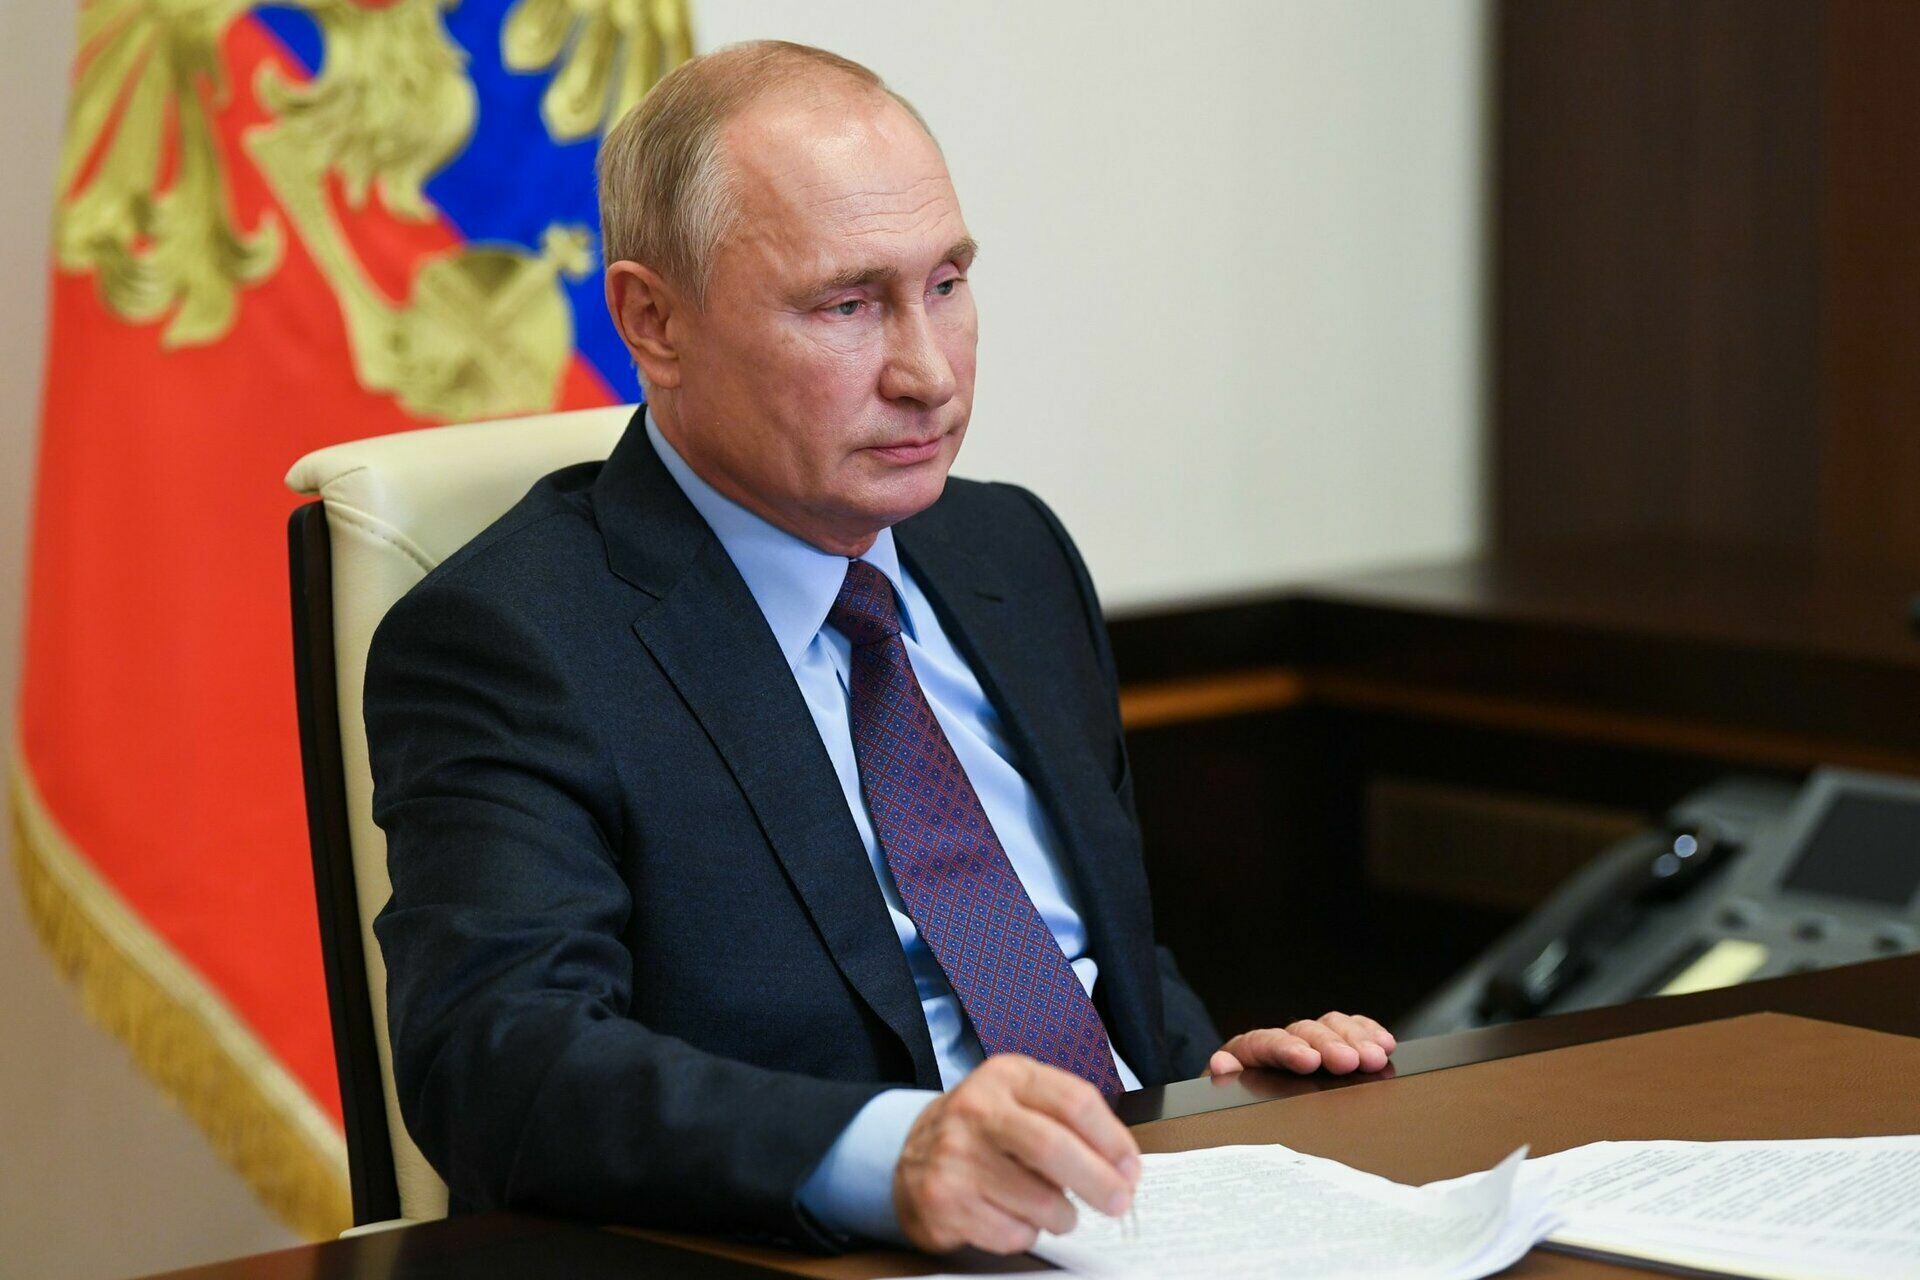 Dmitry Peskov said that the emotional state of Vladimir Putin is normal